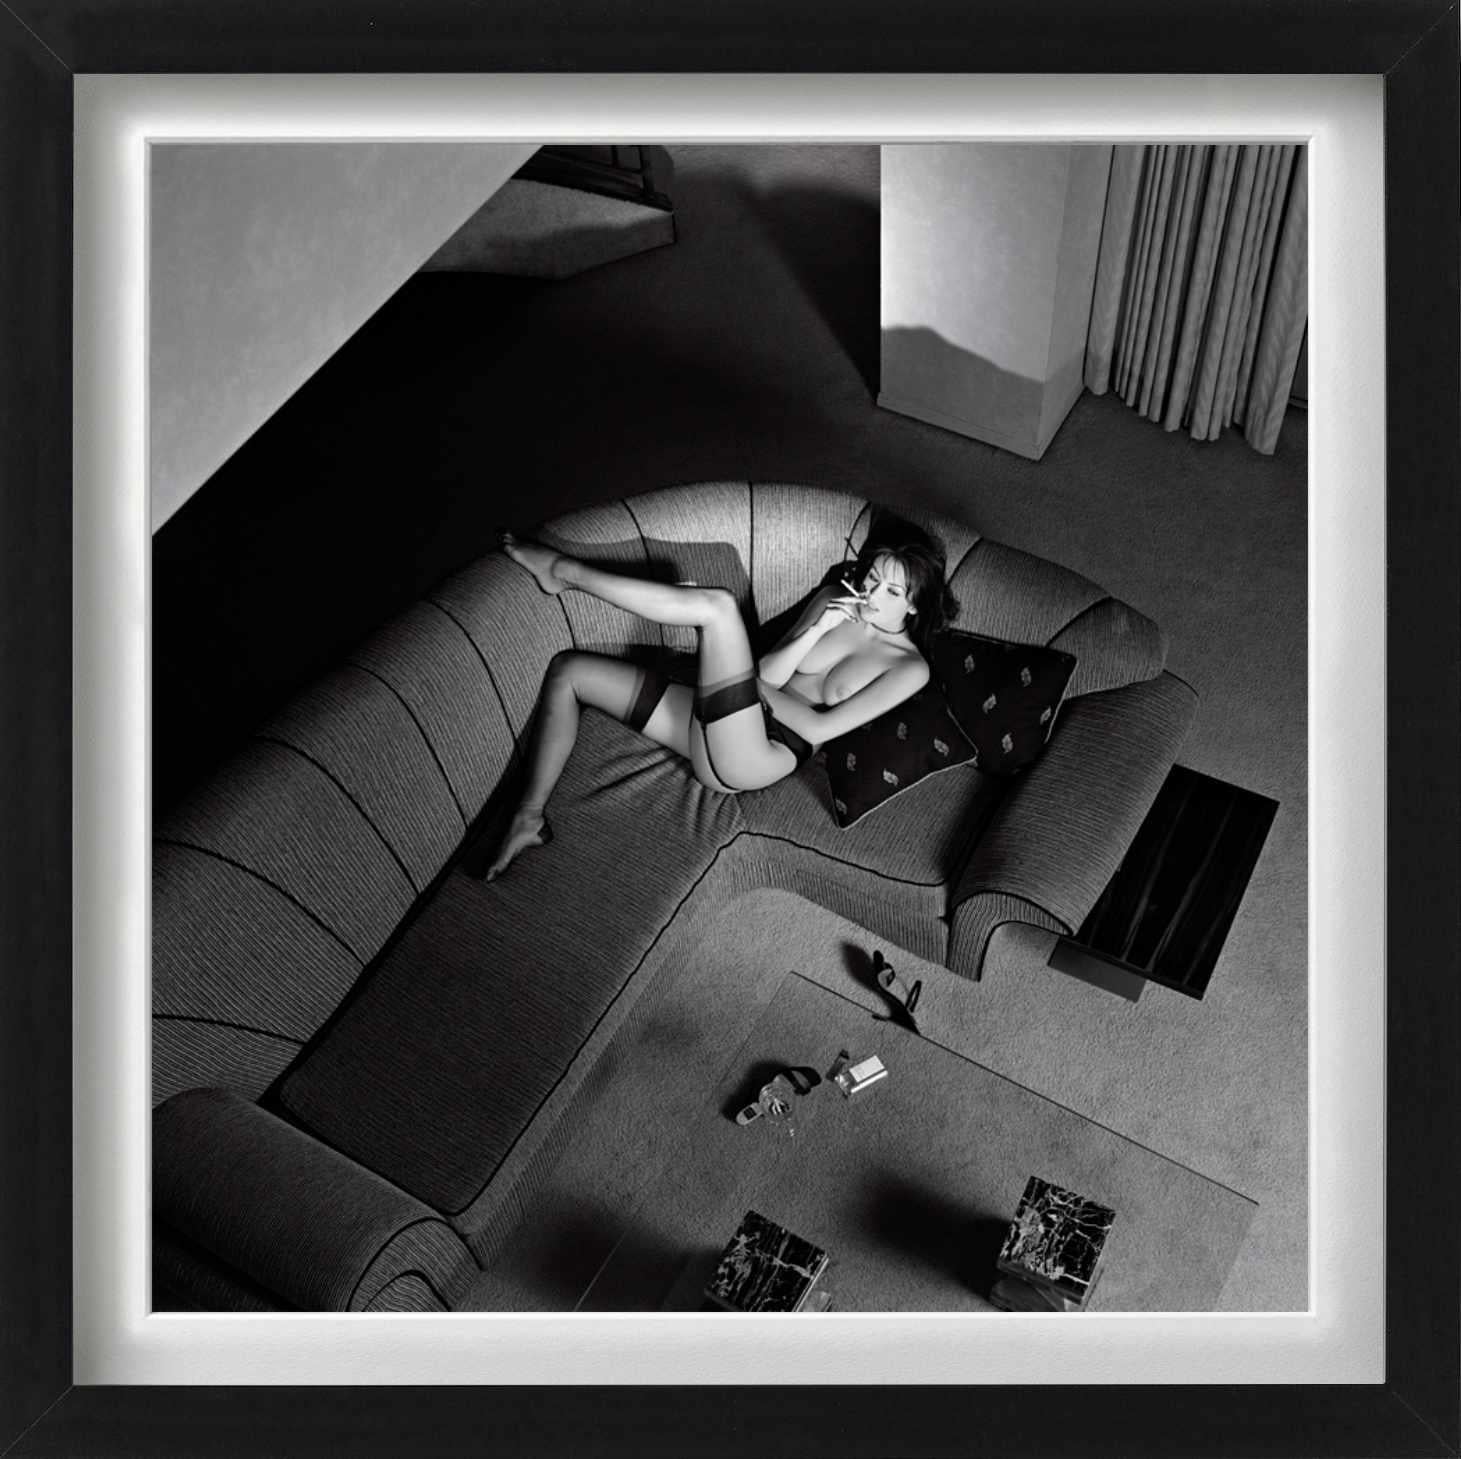 Petra Smoking a Cigarette - Nude Woman on a Sofa, Fine Art Photography, 2012 For Sale 3